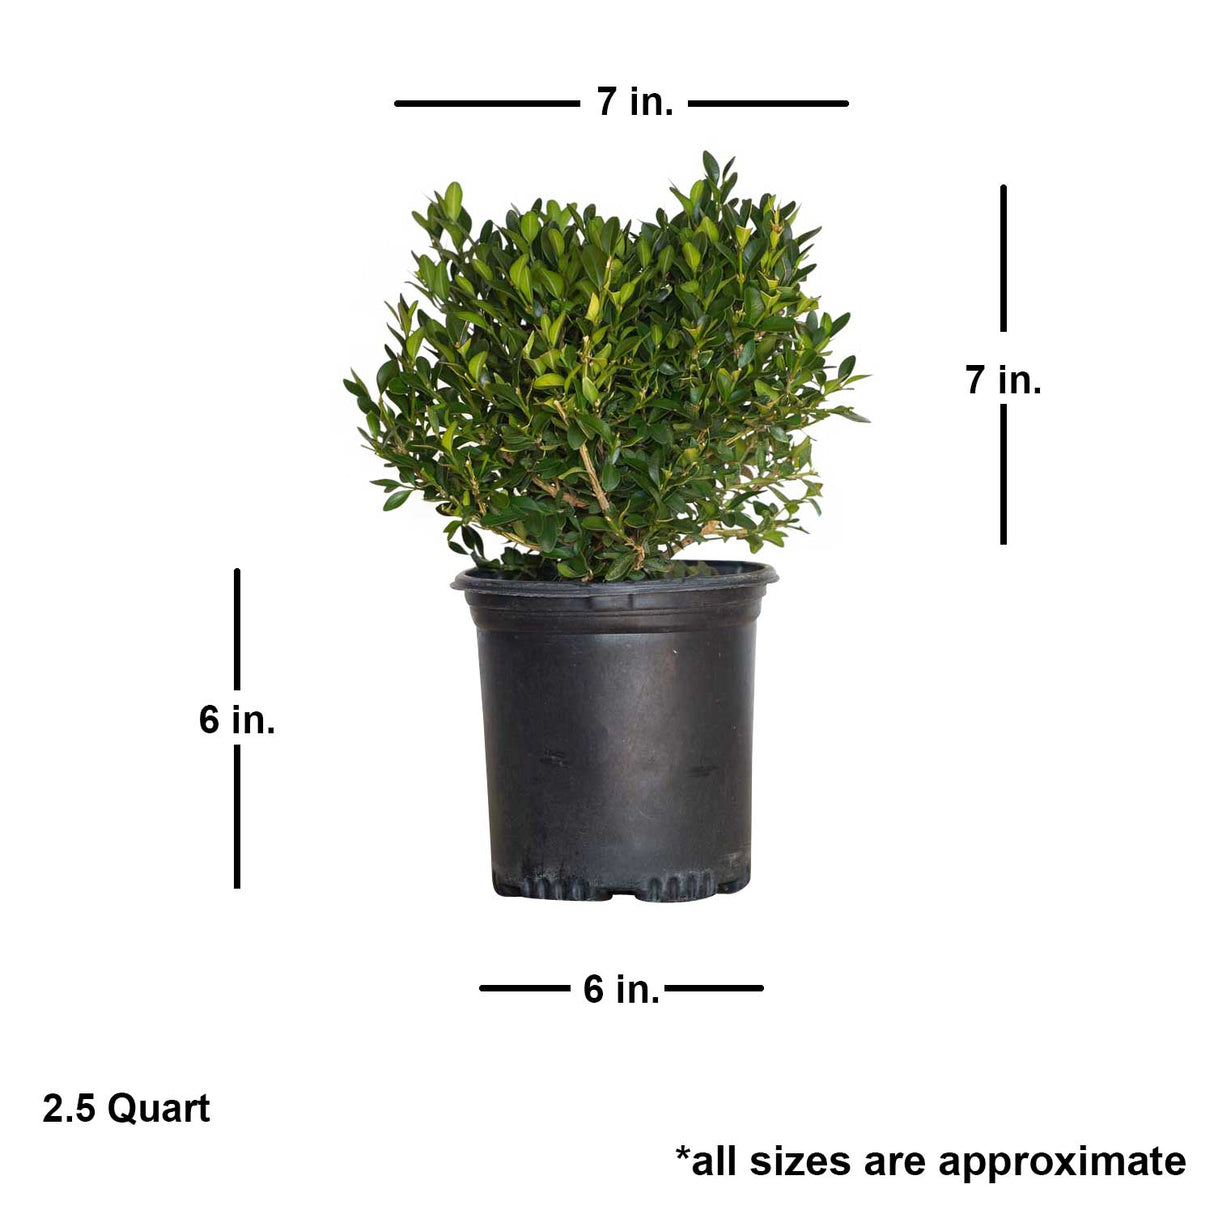 Green Velvet Boxwood Dimensions. Plant in a black pot